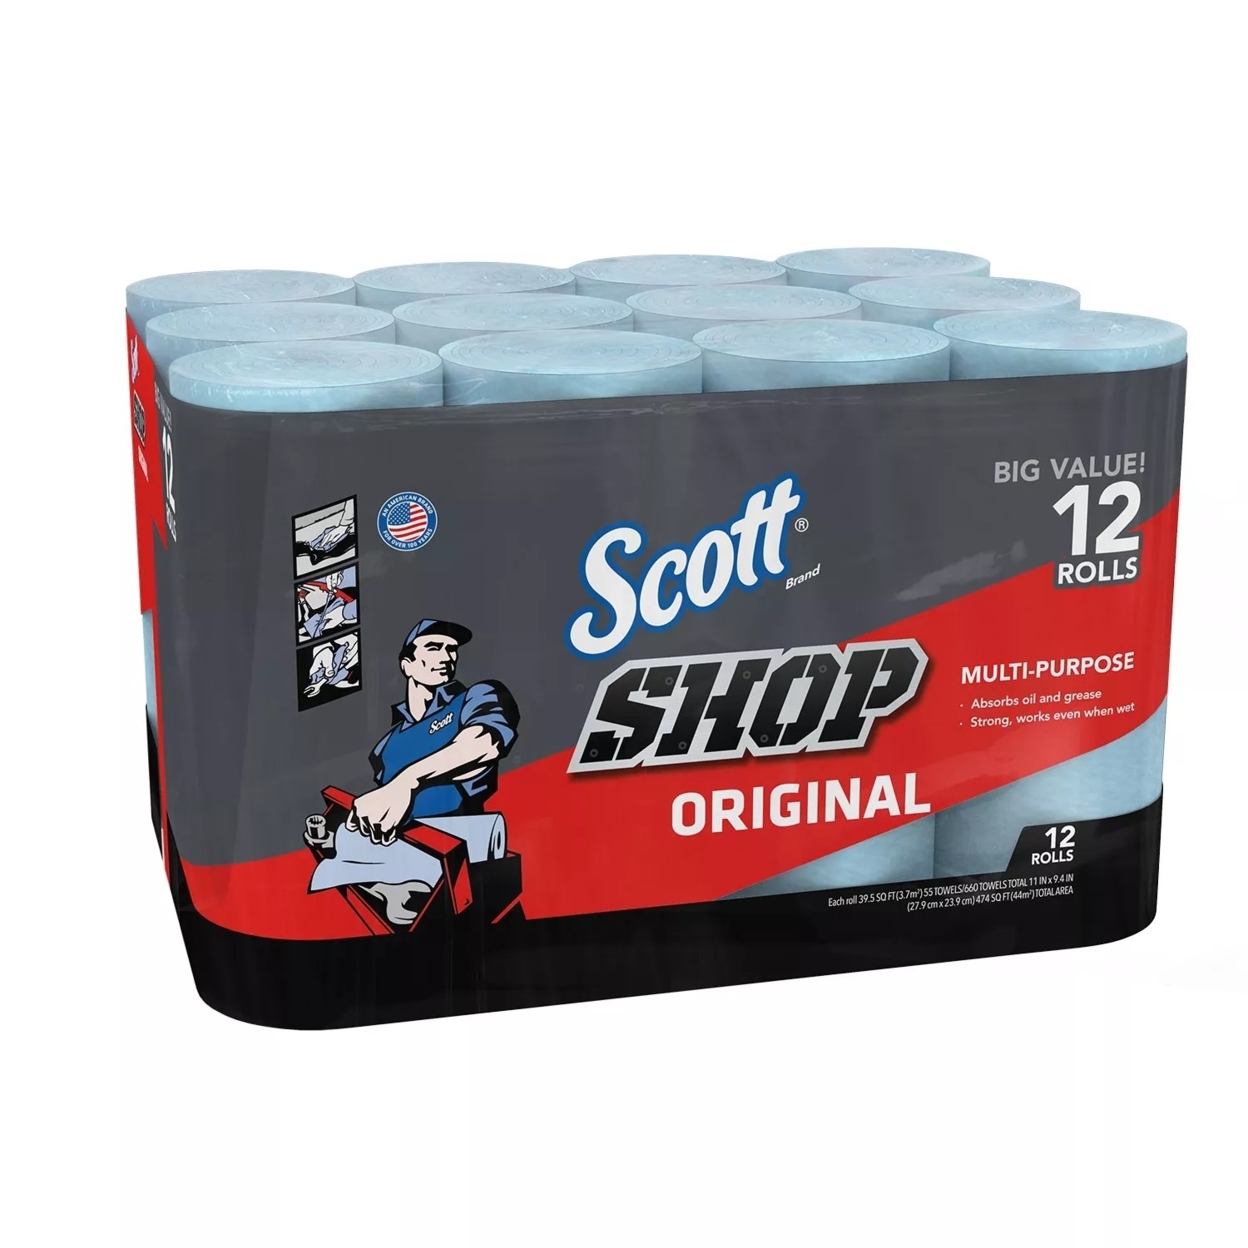 Scott Shop Towels (55 Sheets/Roll, 12 Rolls)